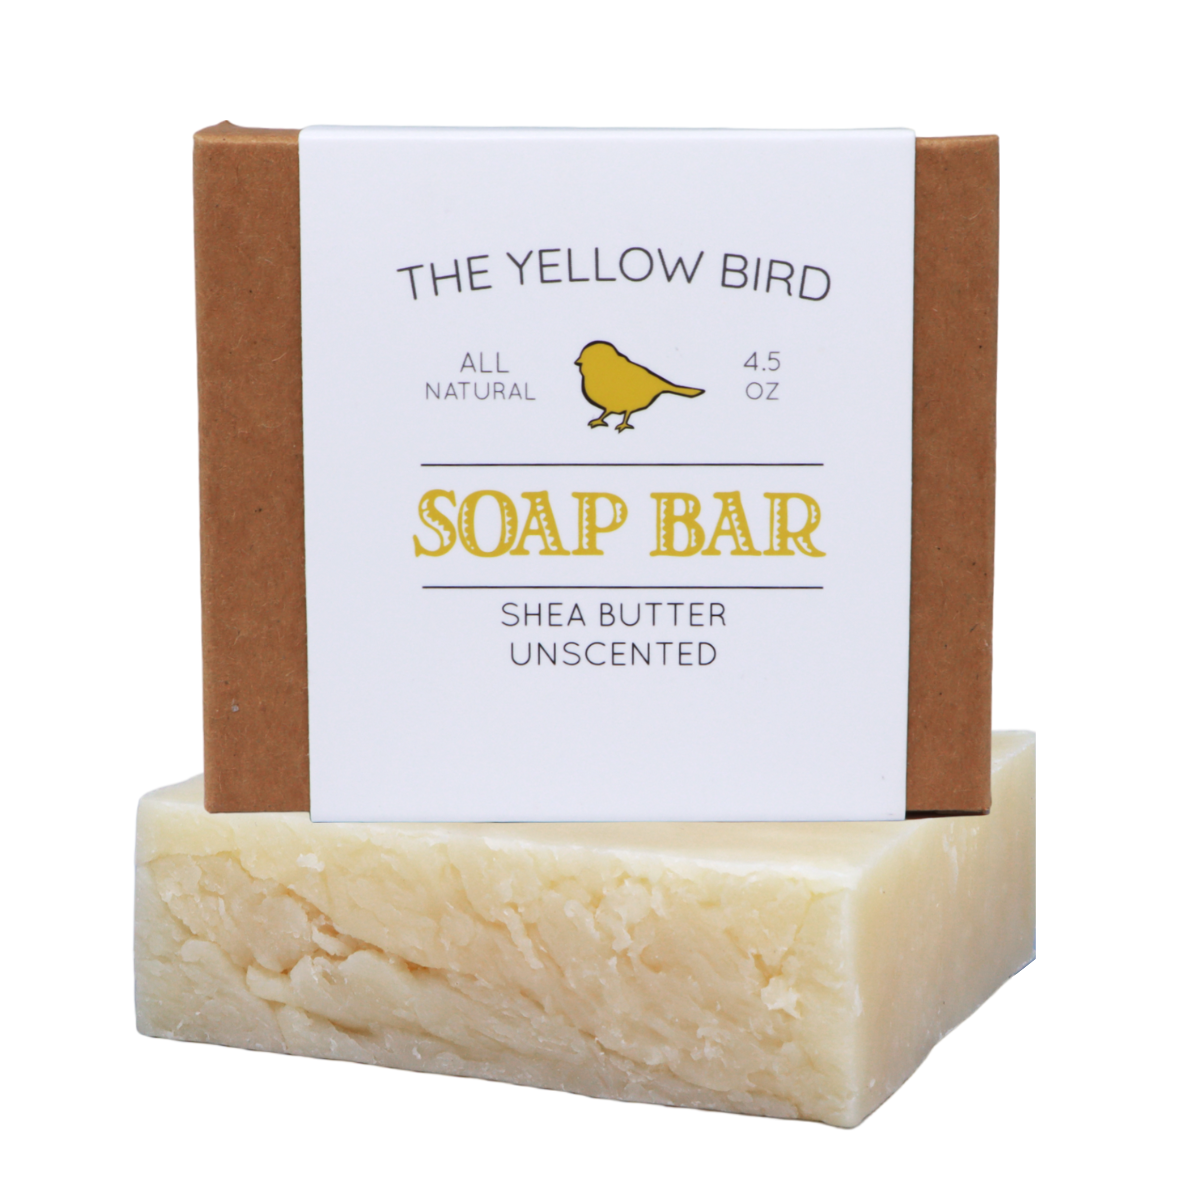 Unscented Shea Butter Soap Bar - The Yellow Bird